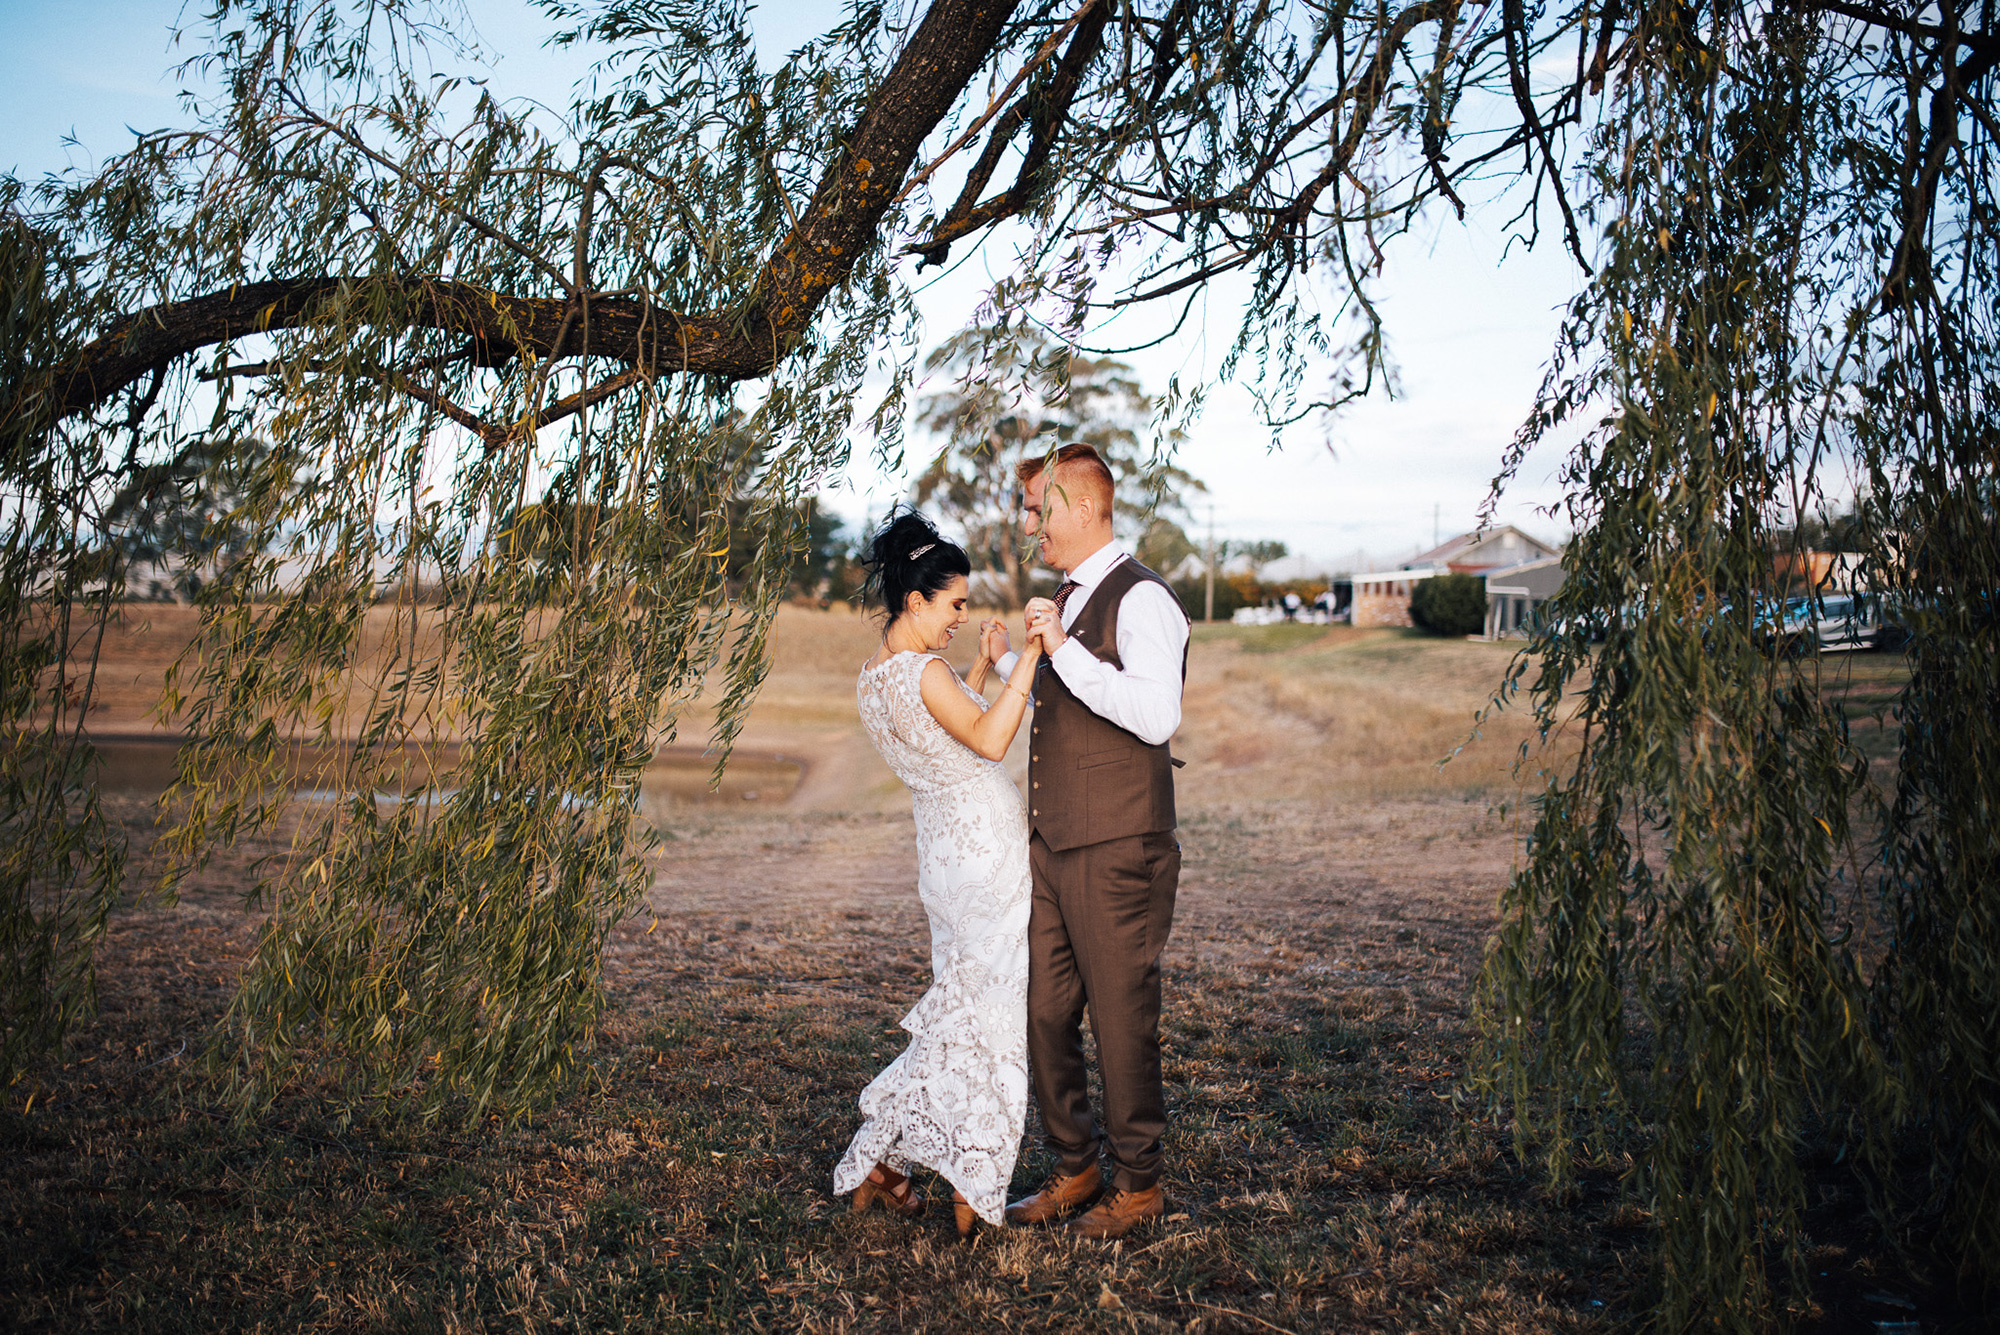 Amy Alex Rustic Vintage Wedding The White Tree 047